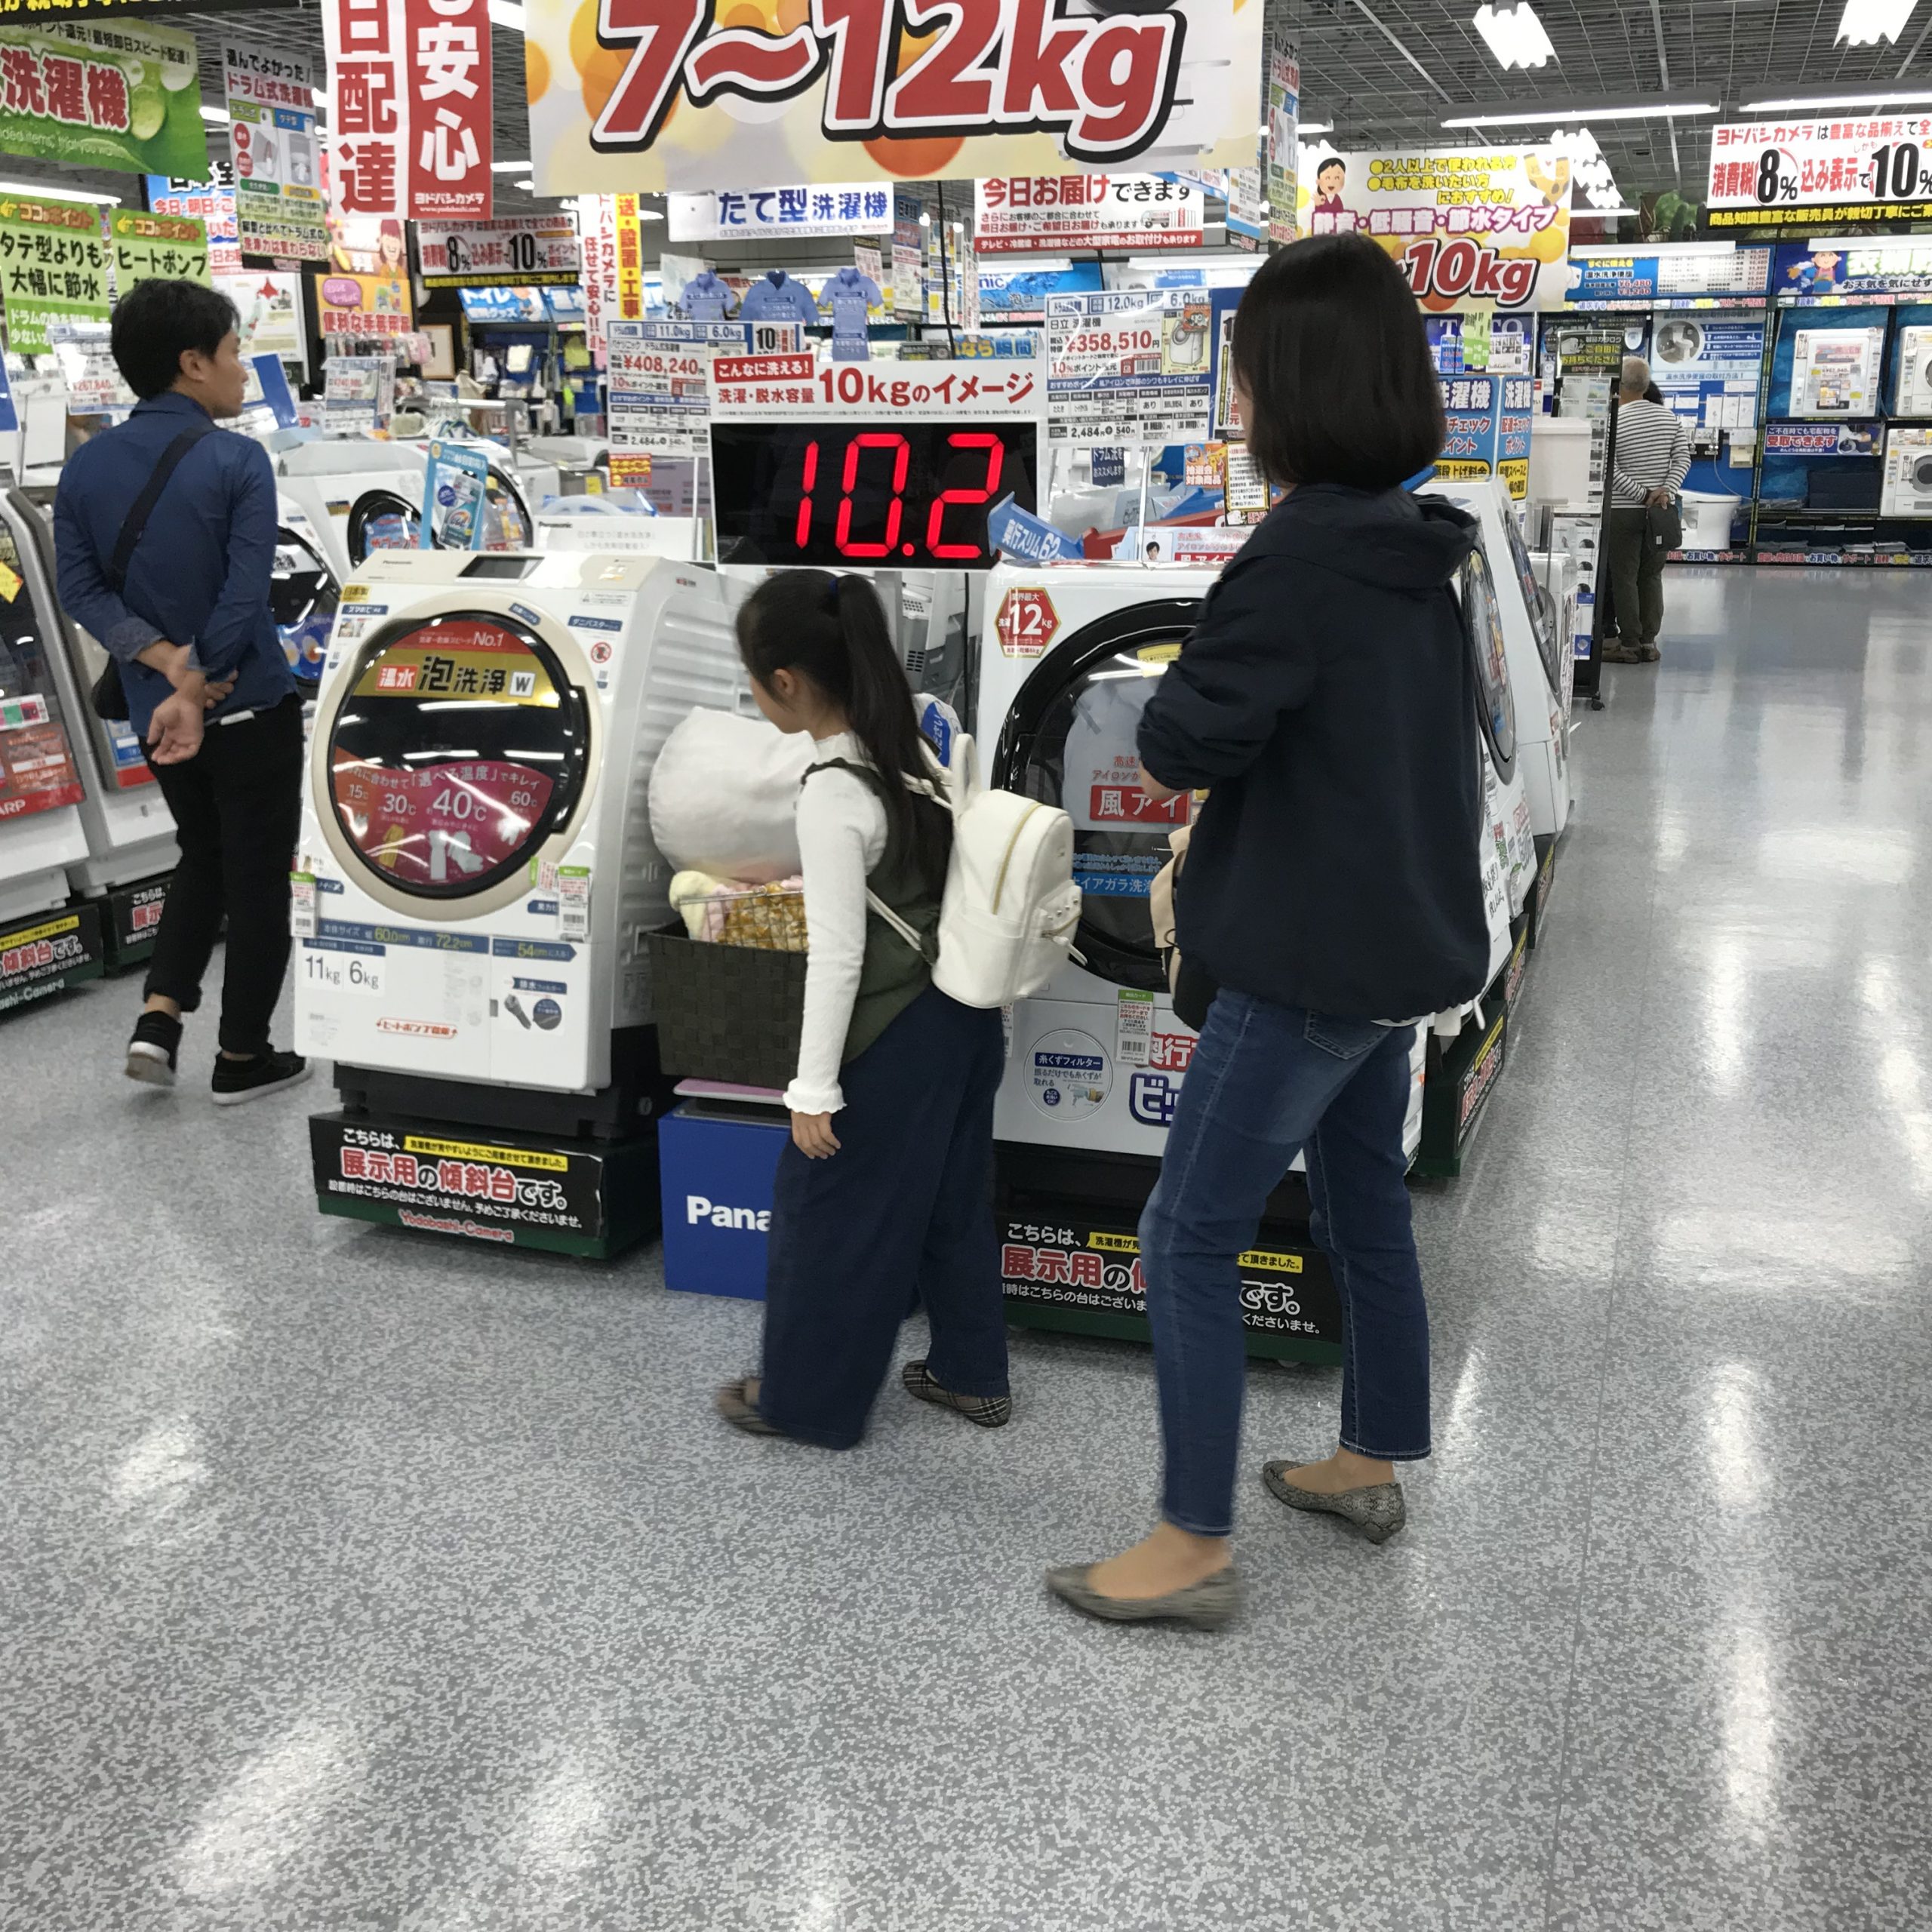 Shark – Japan Market Research